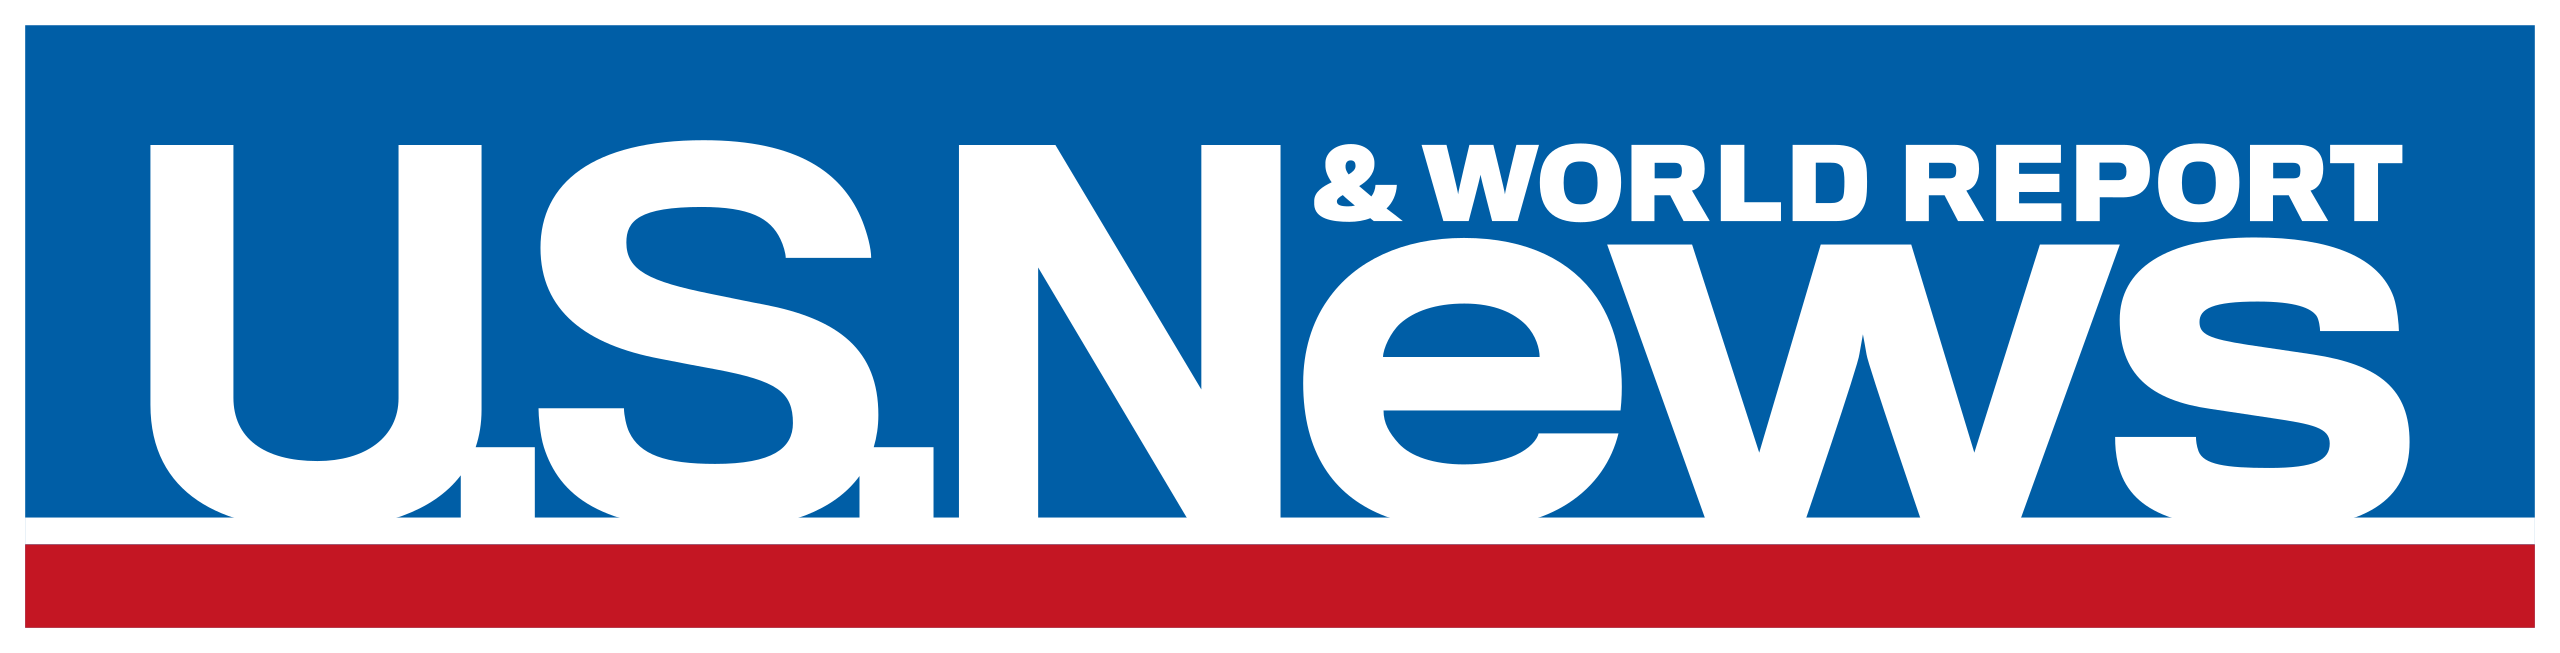 U.S._News_&_World_Report_logo